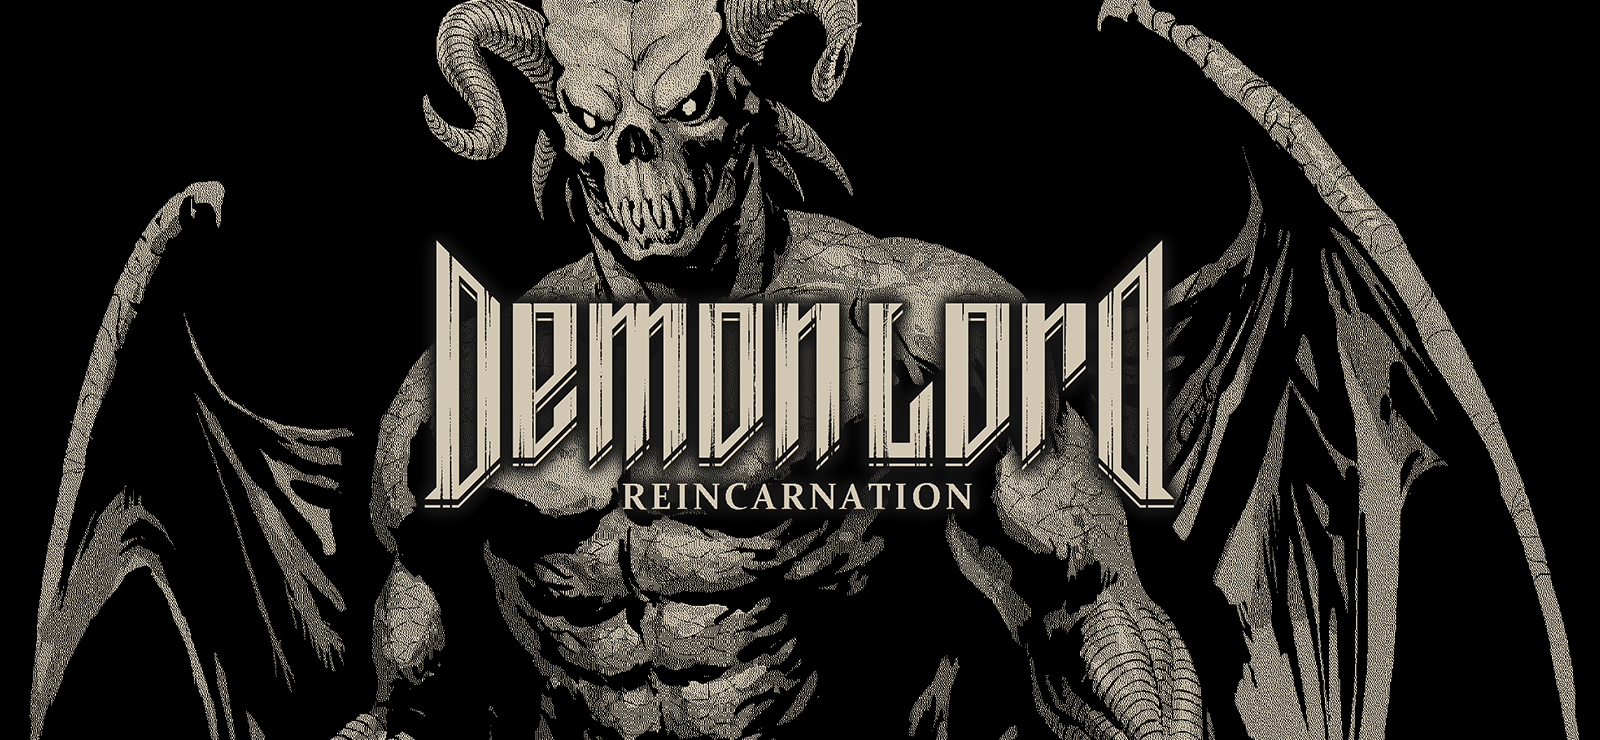 Demon Lord Reincarnation